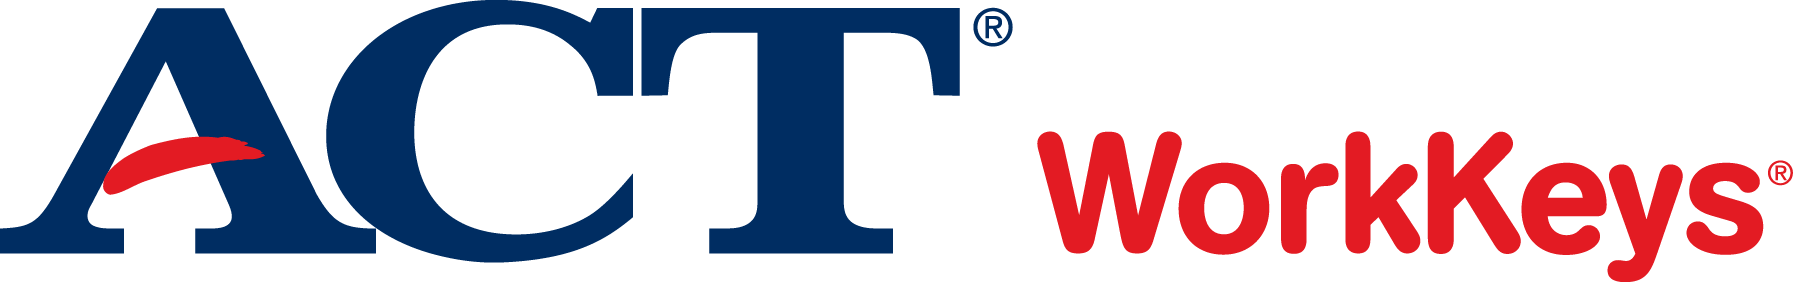 WorkKeys logo